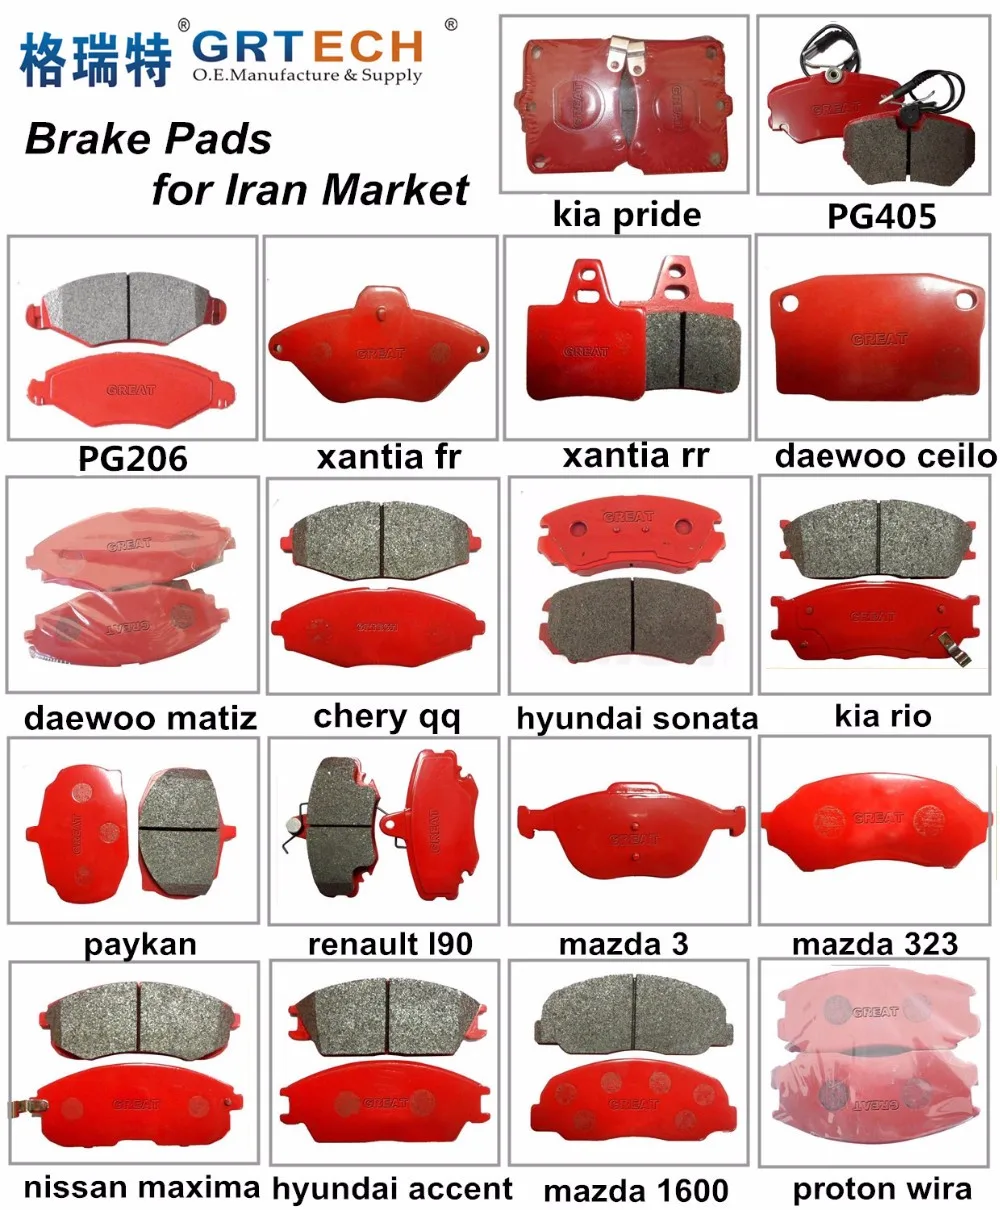 D1515 Brake Pad Cross Reference For Rio Buy Brake Pad For Rio,Brake